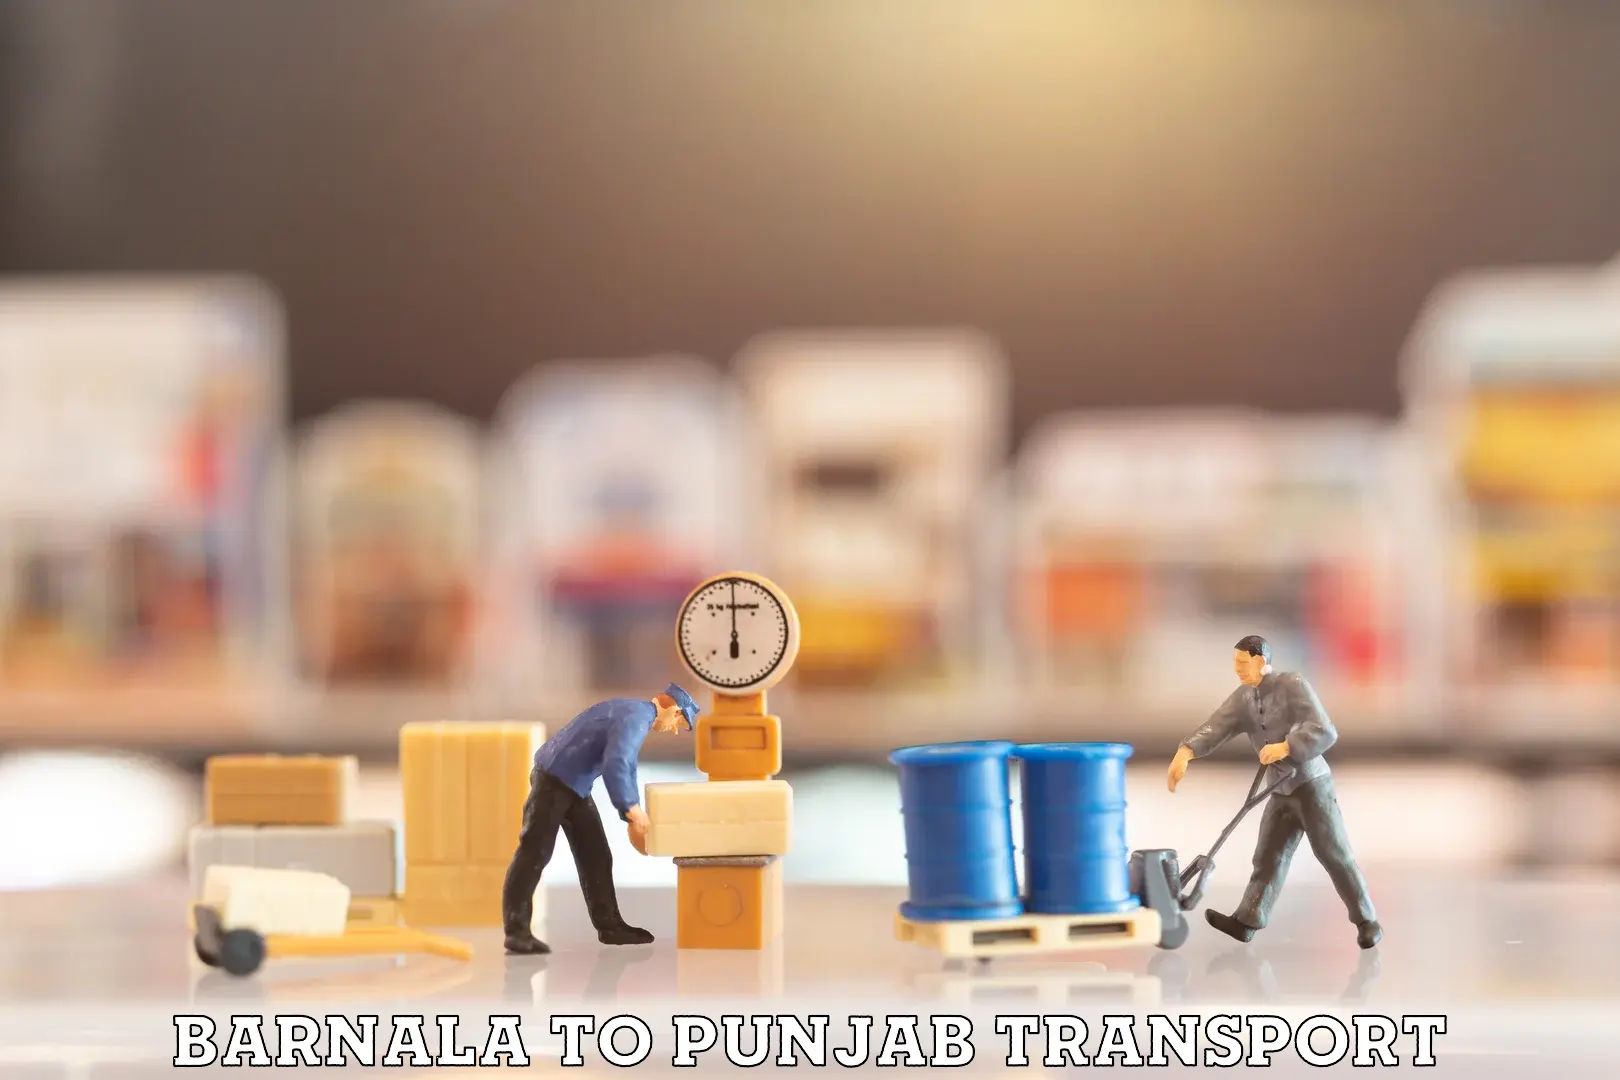 Nearby transport service Barnala to Mohali